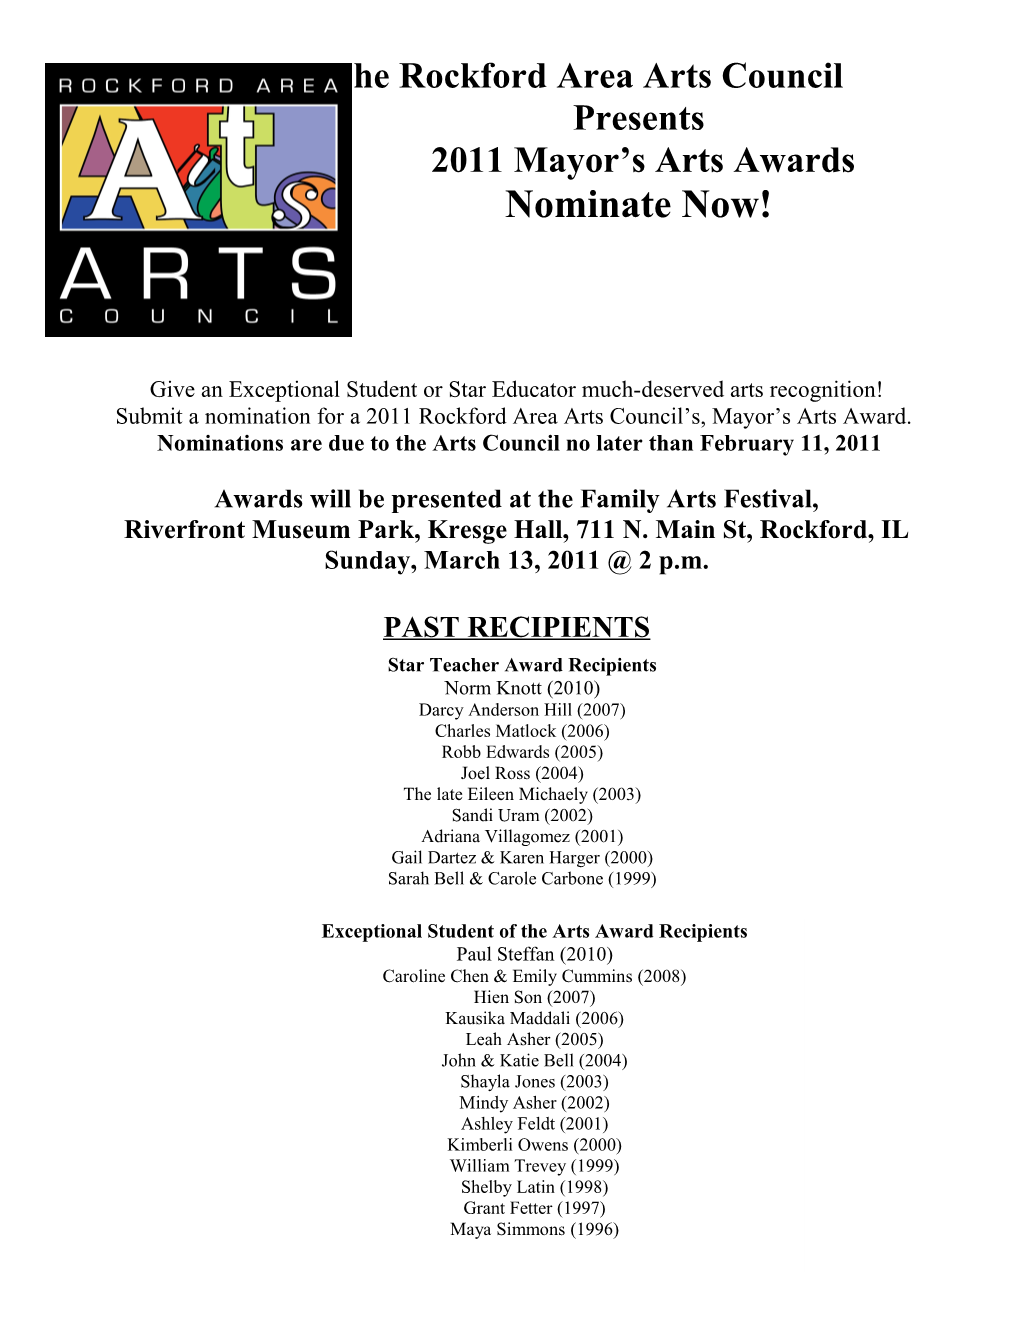 The Rockford Area Arts Council Presents 2011 Mayor S Arts Awards Nominate Now!